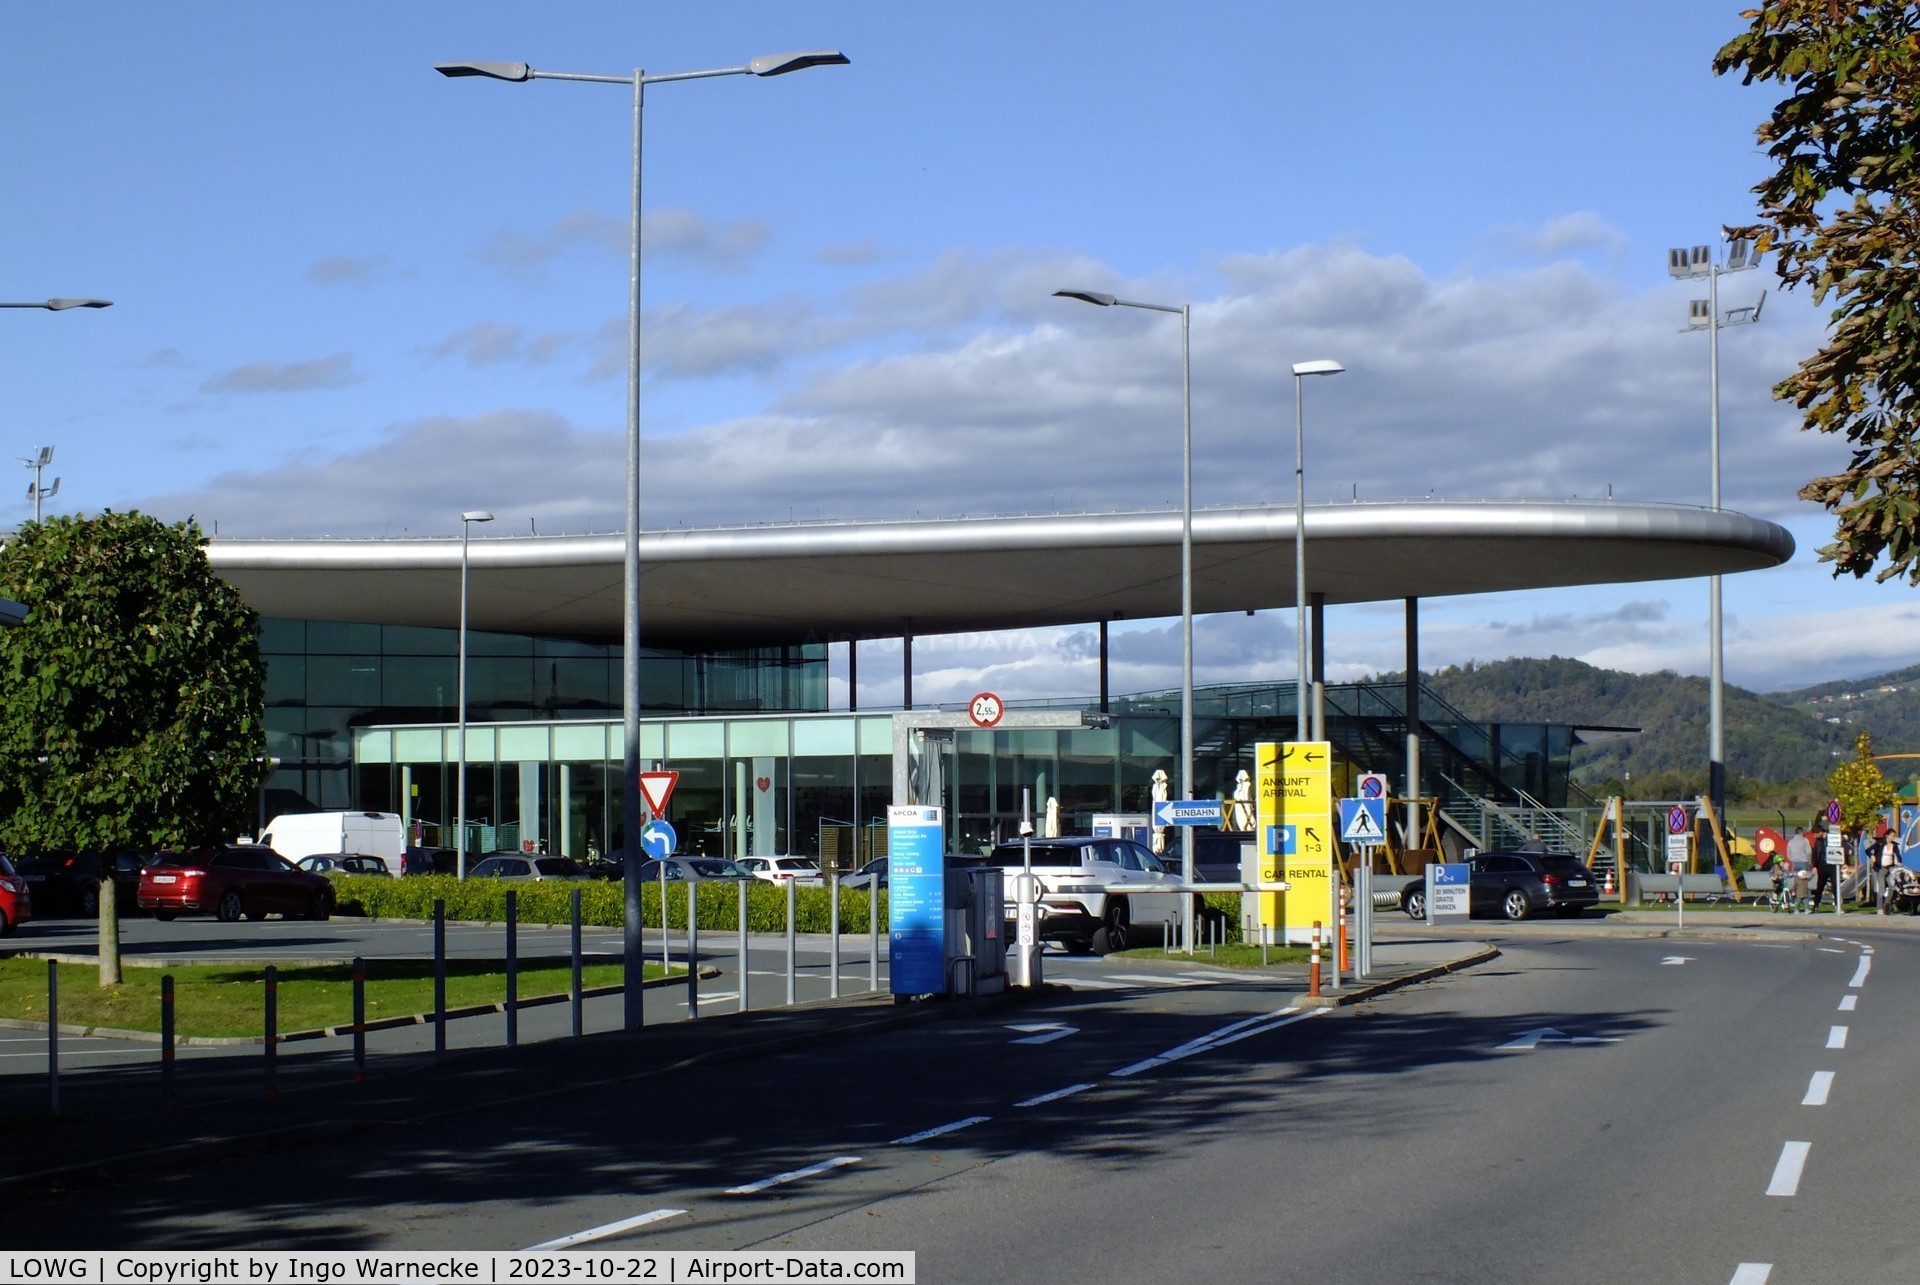 Graz Airport, Graz Austria (LOWG) - northern end of the terminal at Graz airport